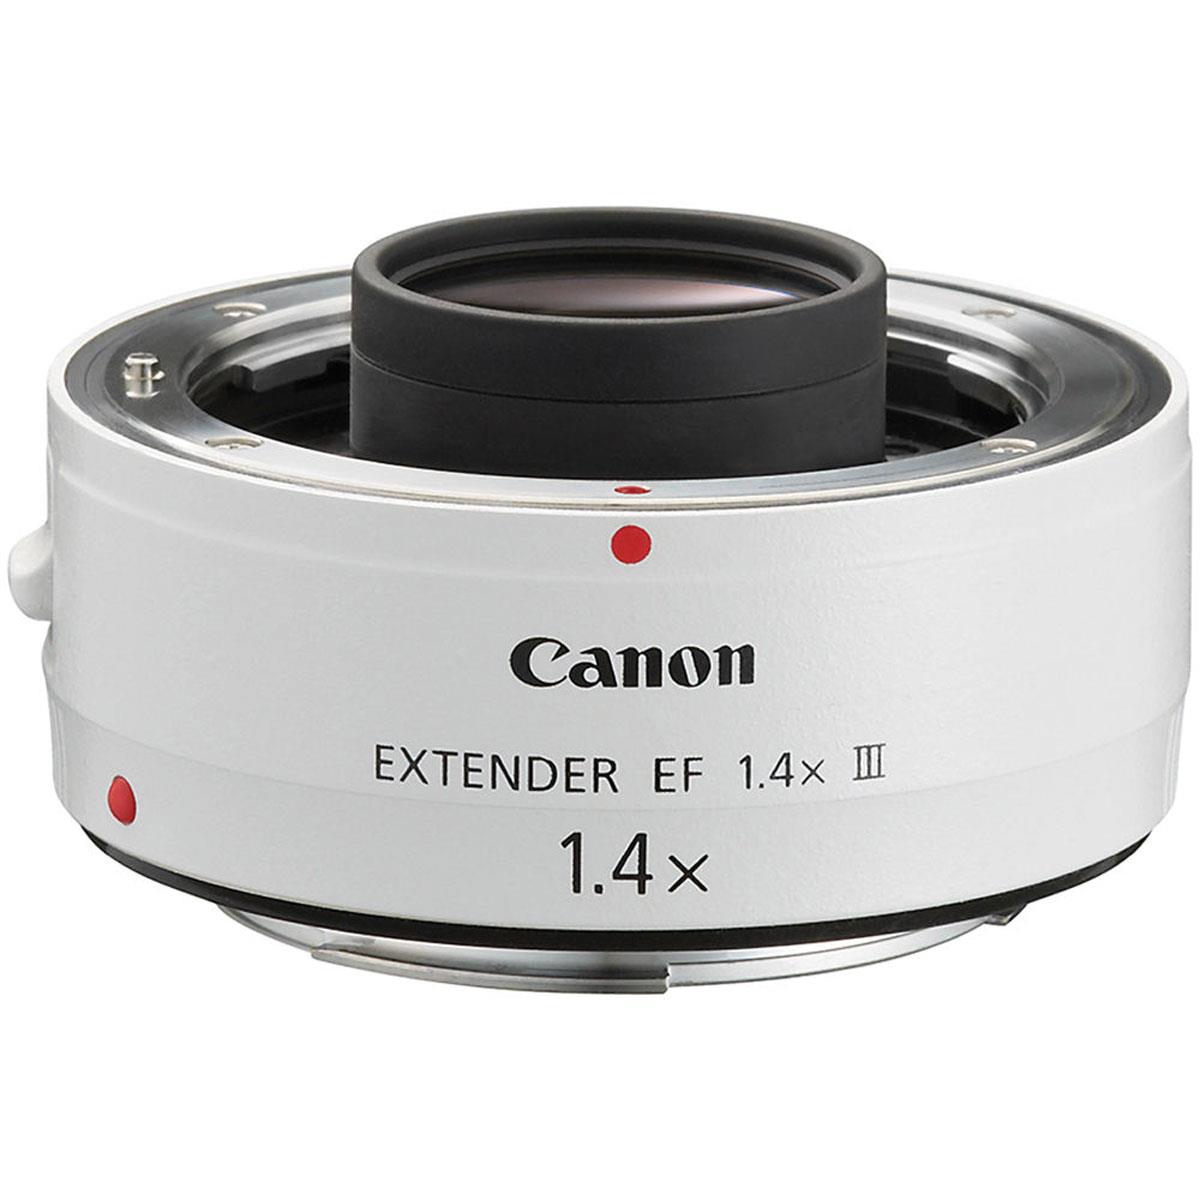 Image of Canon Extender EF 1.4x III Tele Extender